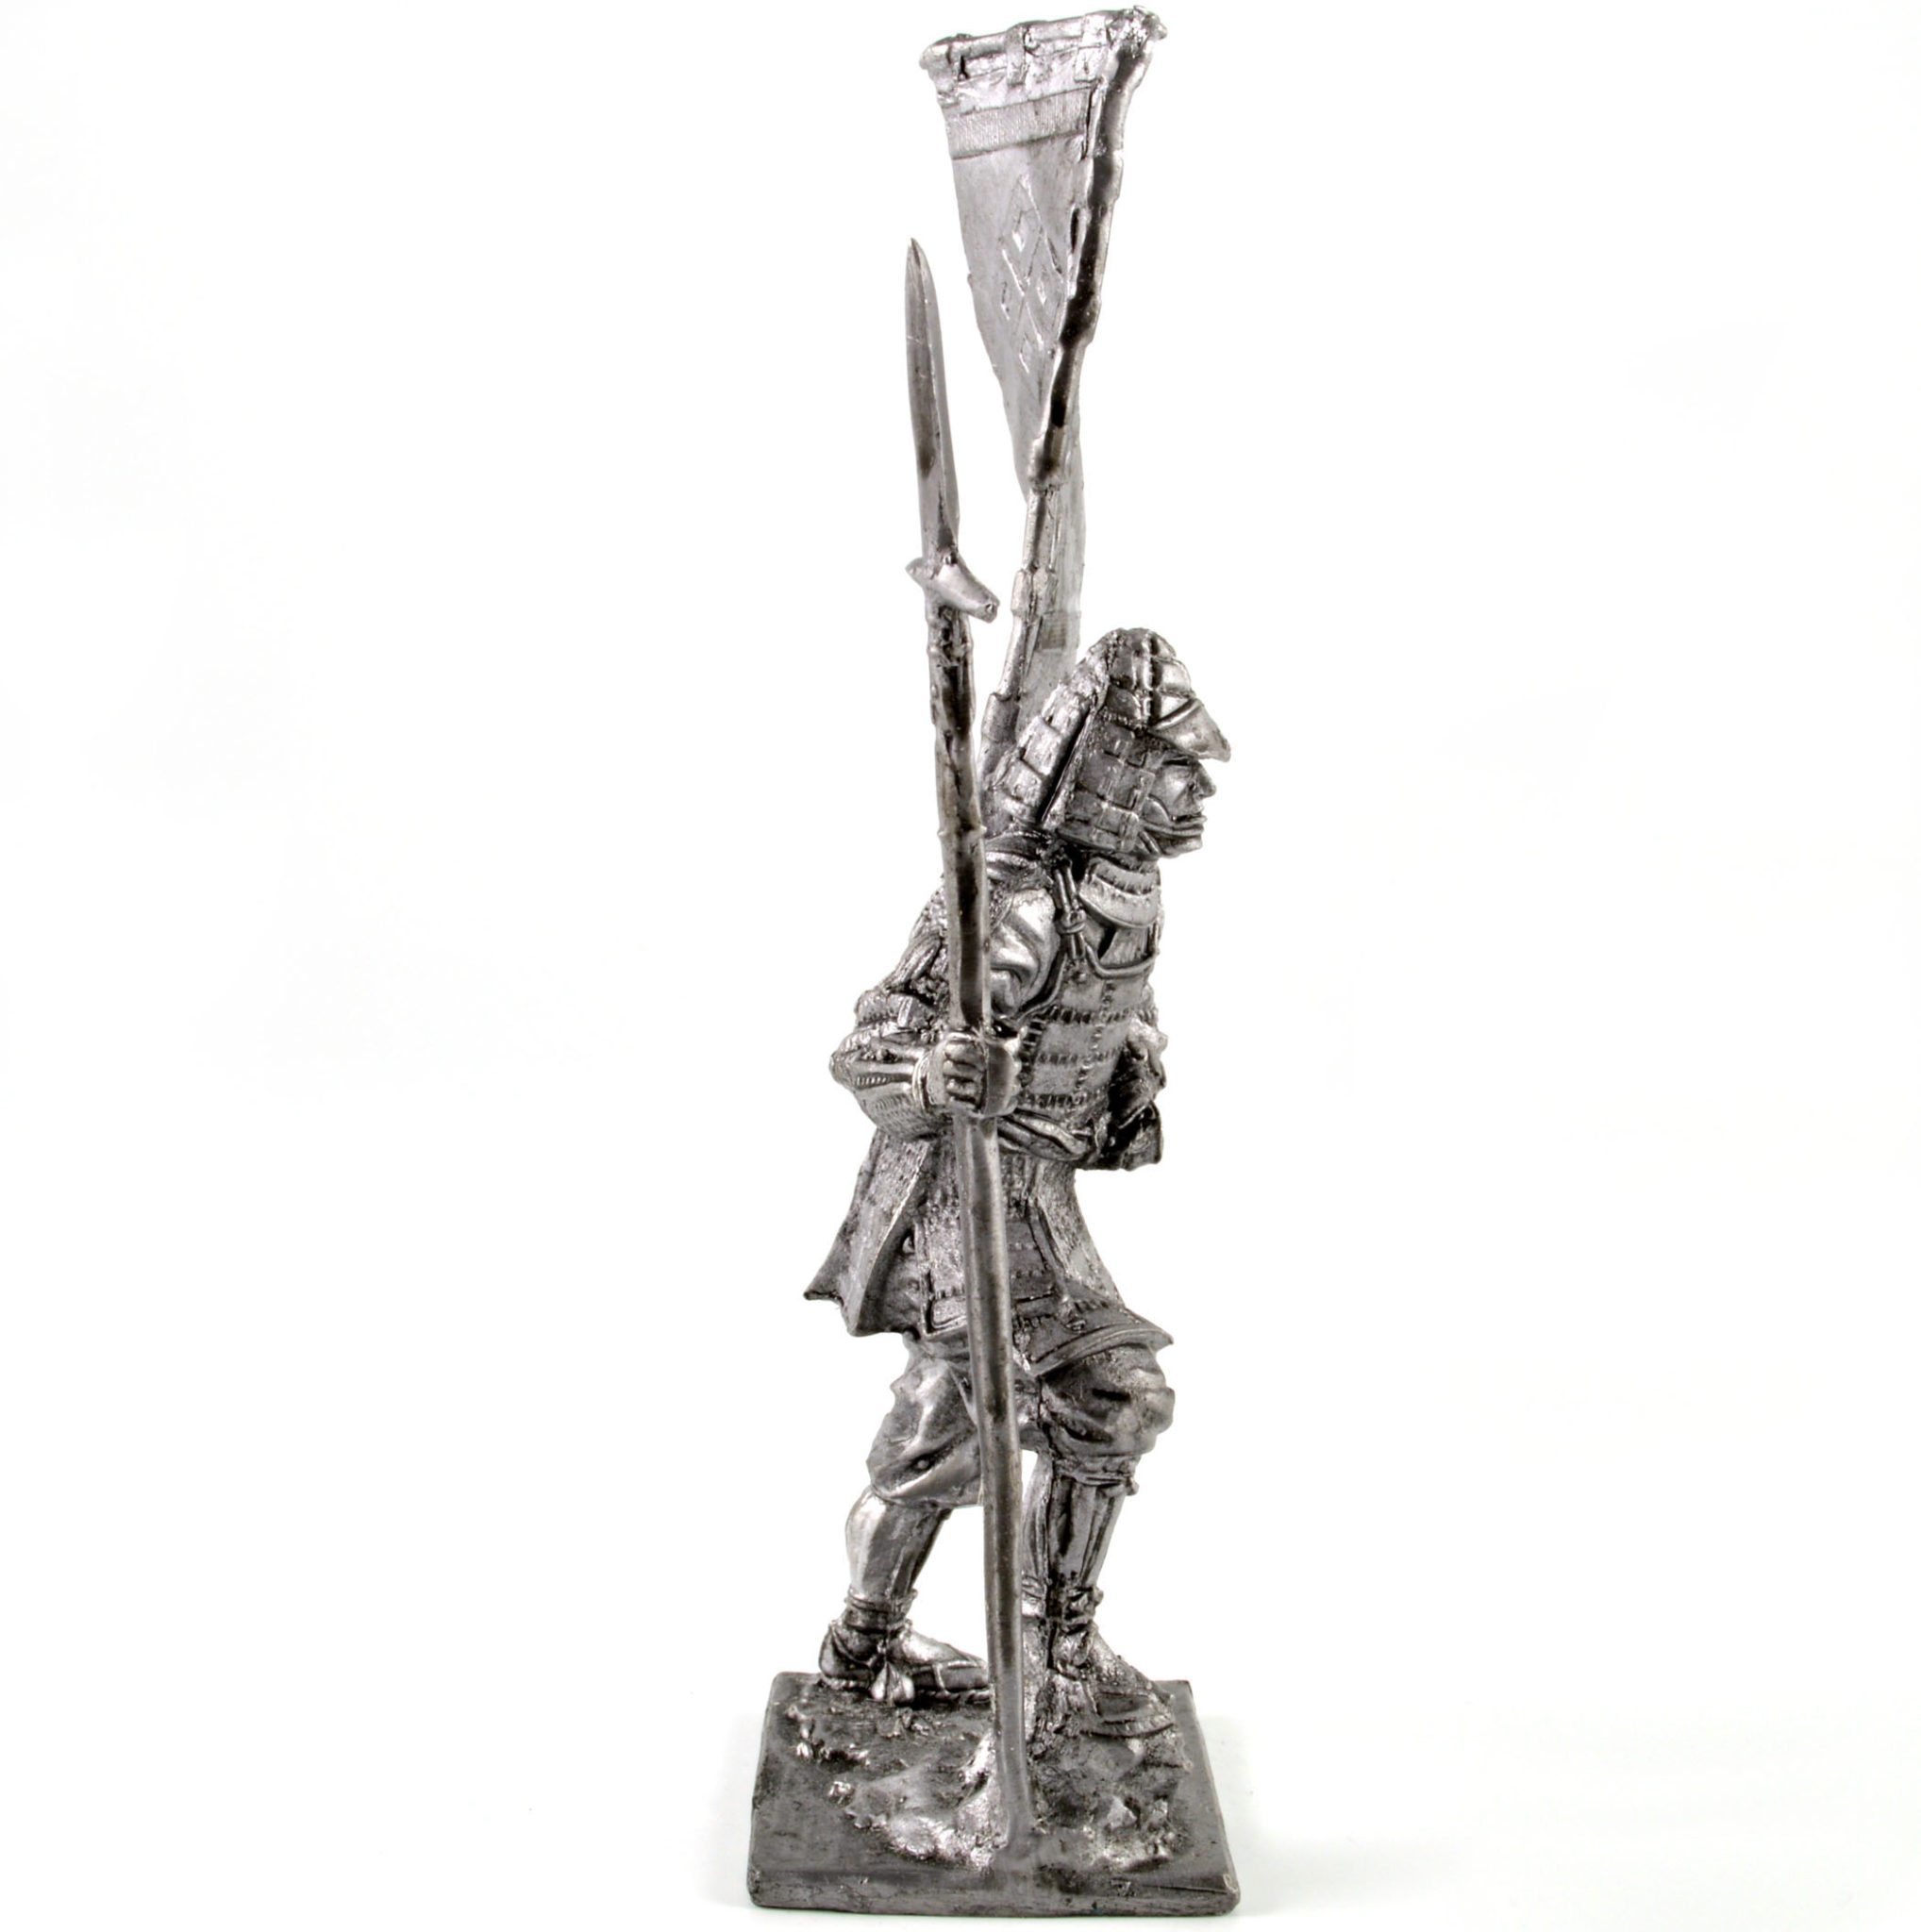 Tin toy soldiers Ashigaru Japan 54mm miniature figurine metal sculpture 